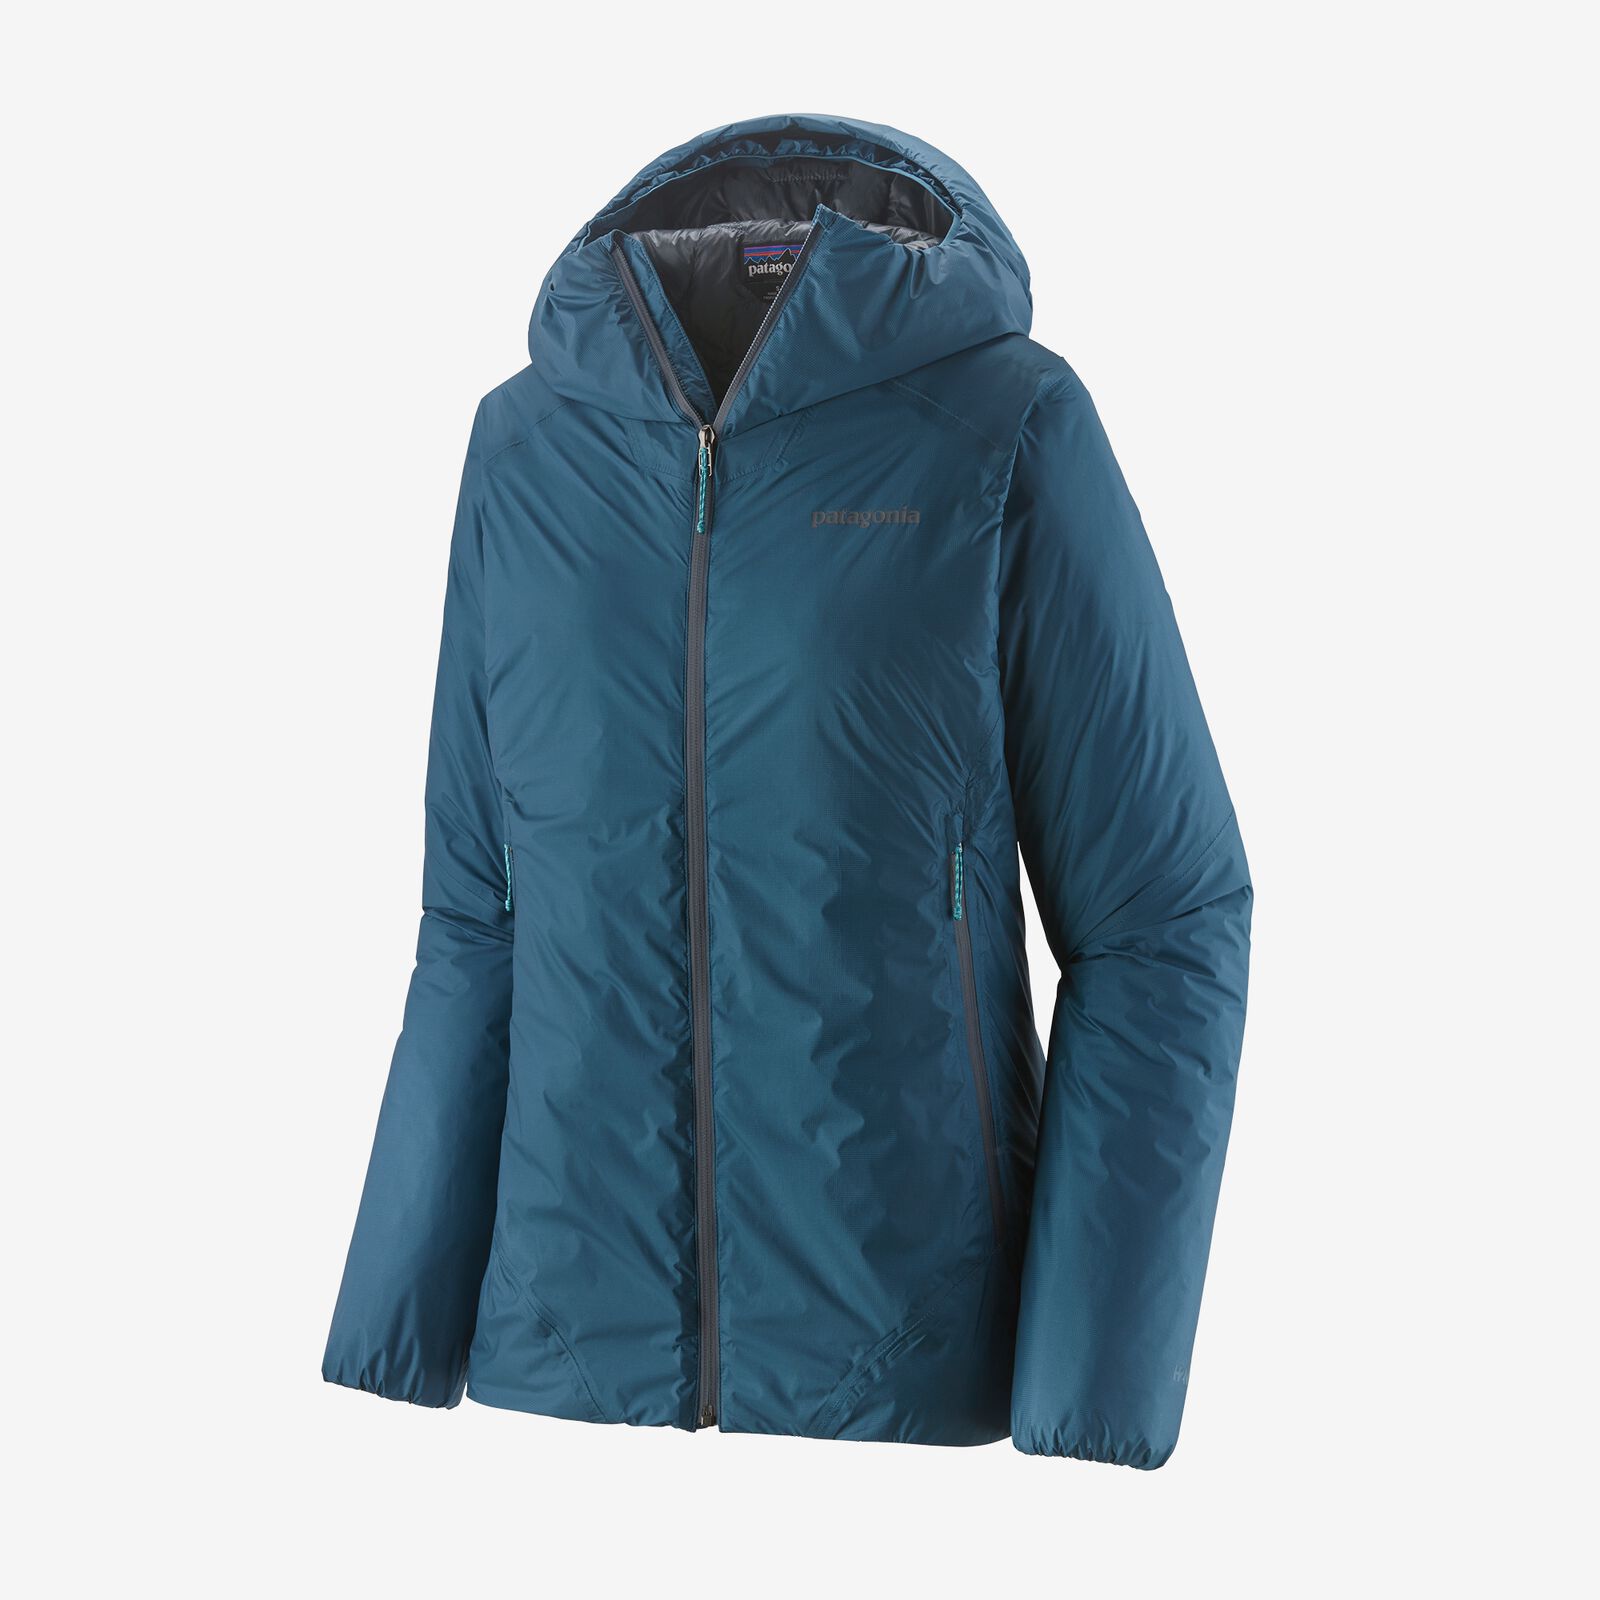 Patagonia Women's Micro Puff® Storm Jacket